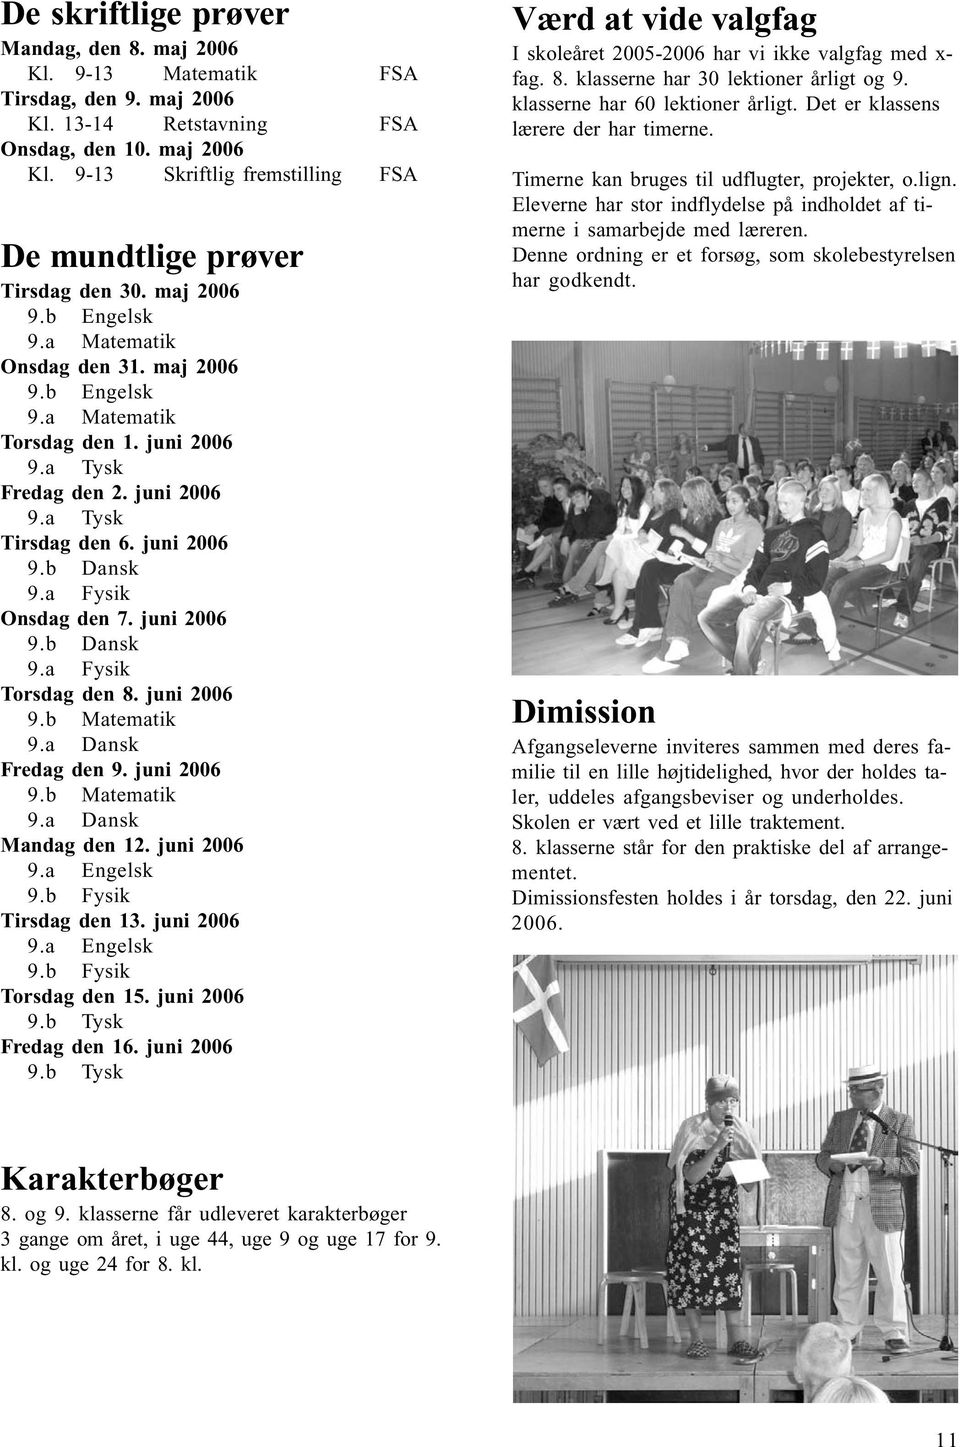 a Fysik Onsdag den 7. juni 2006 9.b Dansk 9.a Fysik Torsdag den 8. juni 2006 9.b Matematik 9.a Dansk Fredag den 9. juni 2006 9.b Matematik 9.a Dansk Mandag den 12. juni 2006 9.a Engelsk 9.